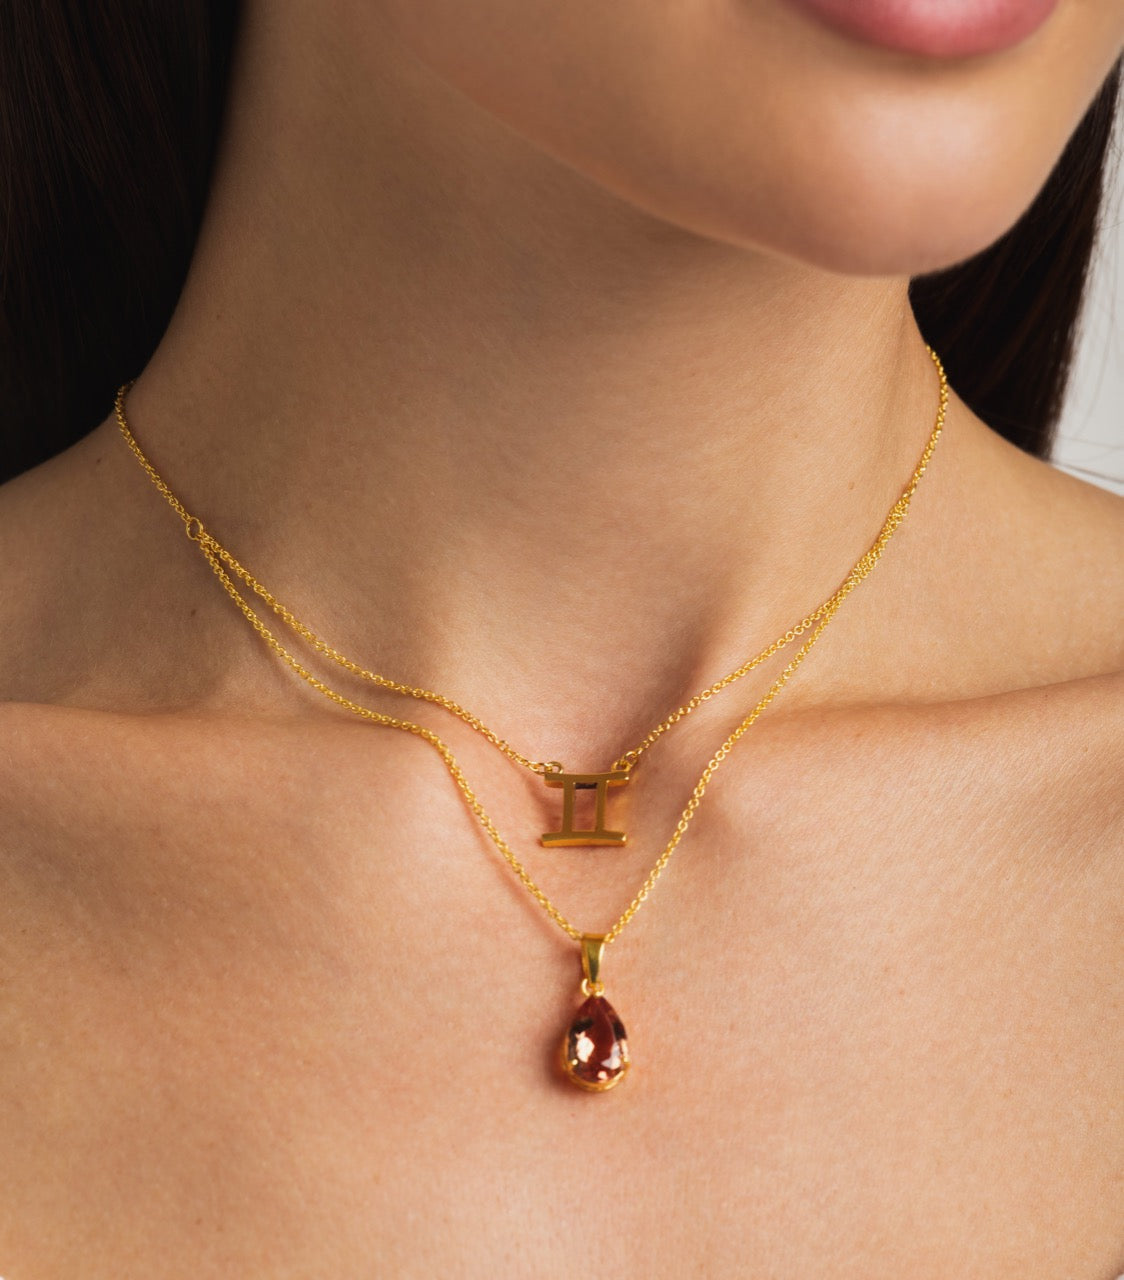 zodiac sign necklace- gemini- gold